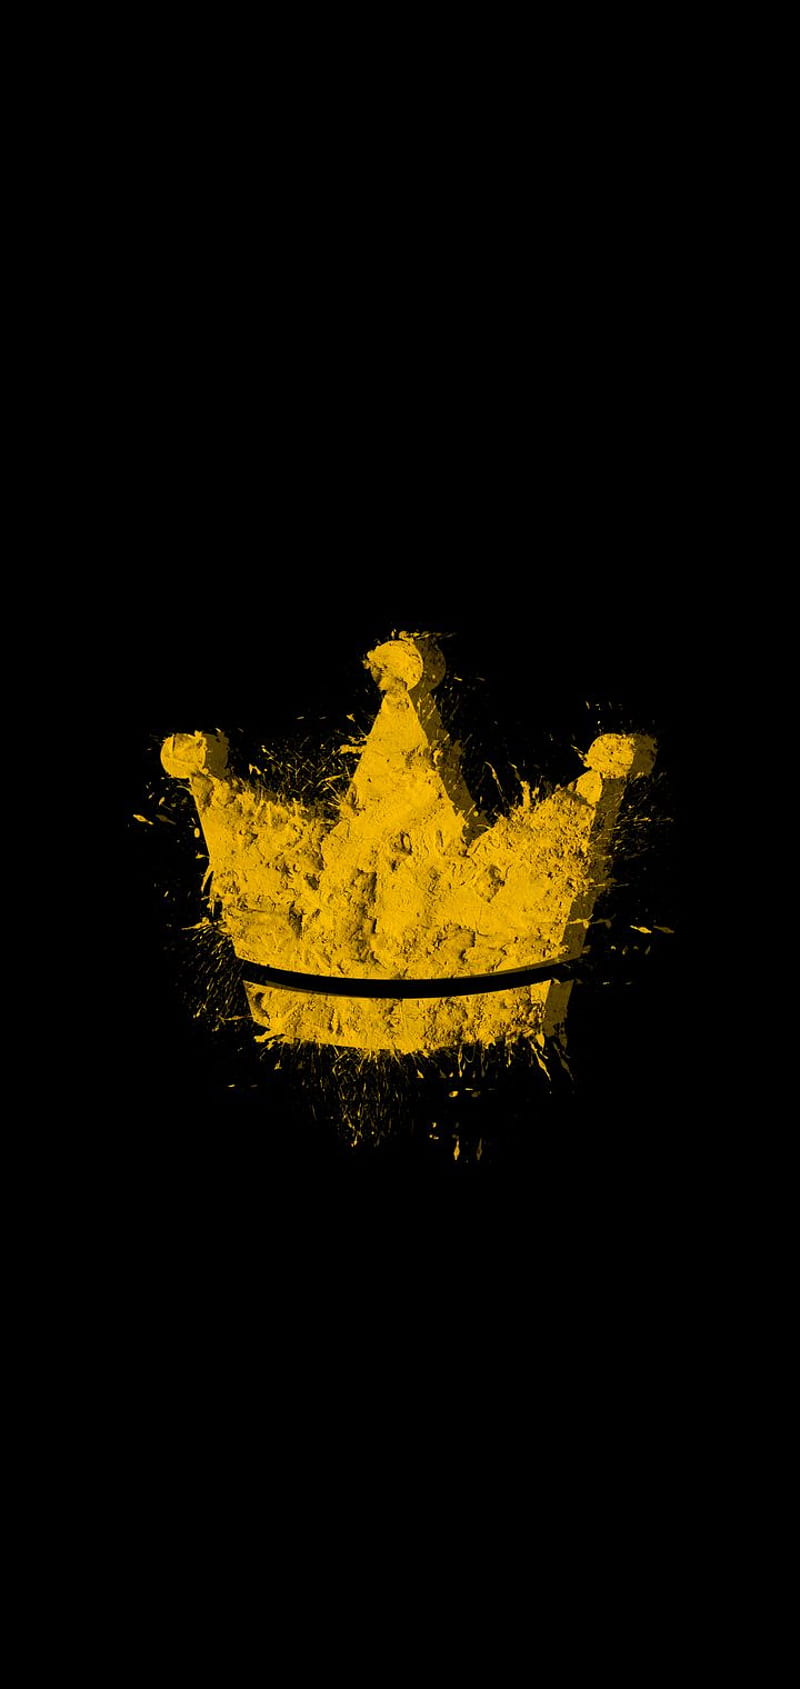 King Logo PNG Transparent Images Free Download | Vector Files | Pngtree